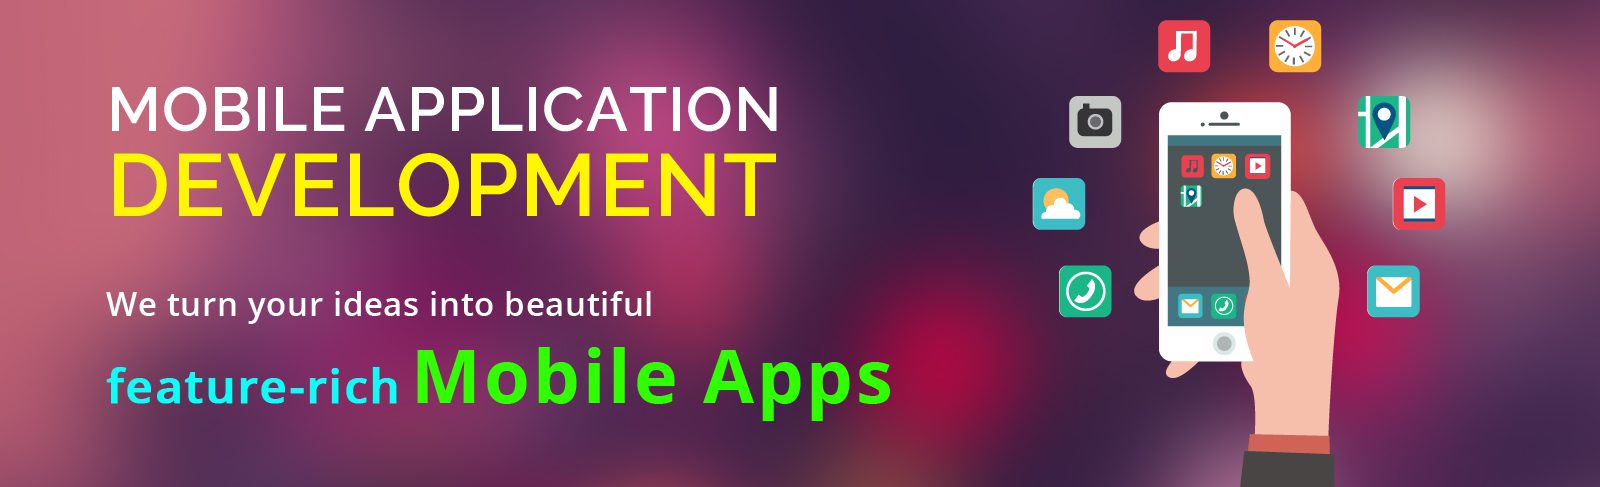 mobile-application-banner